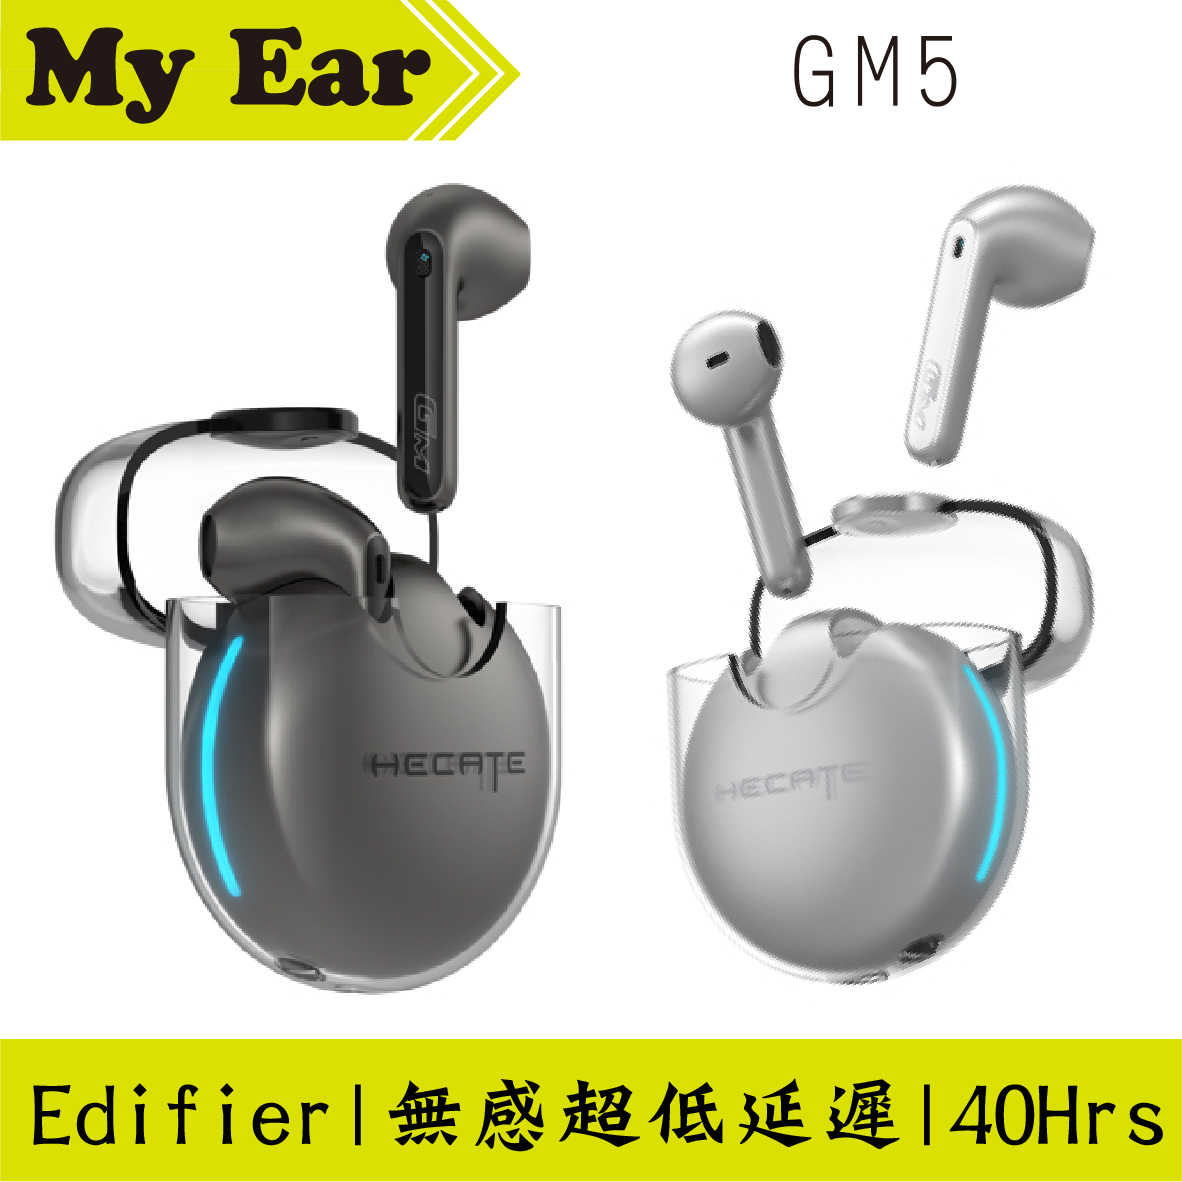 Edifier GM5 超低延遲 電競 無線藍芽耳機 | My Ear 耳機專門店